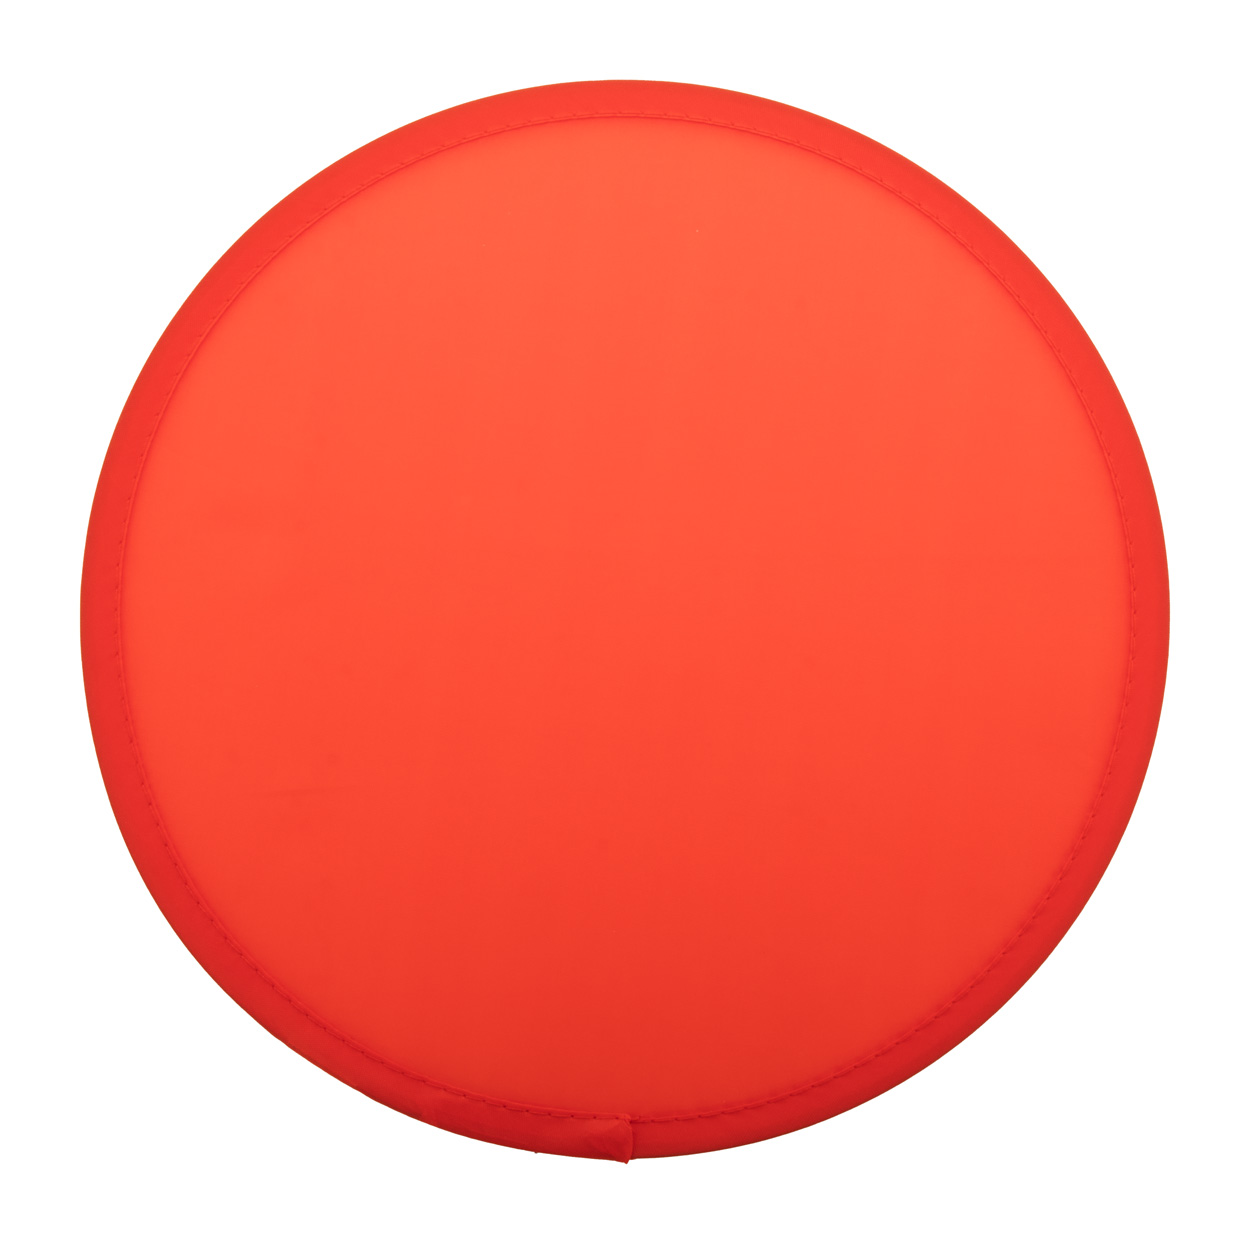 Rocket RPET frisbee - red